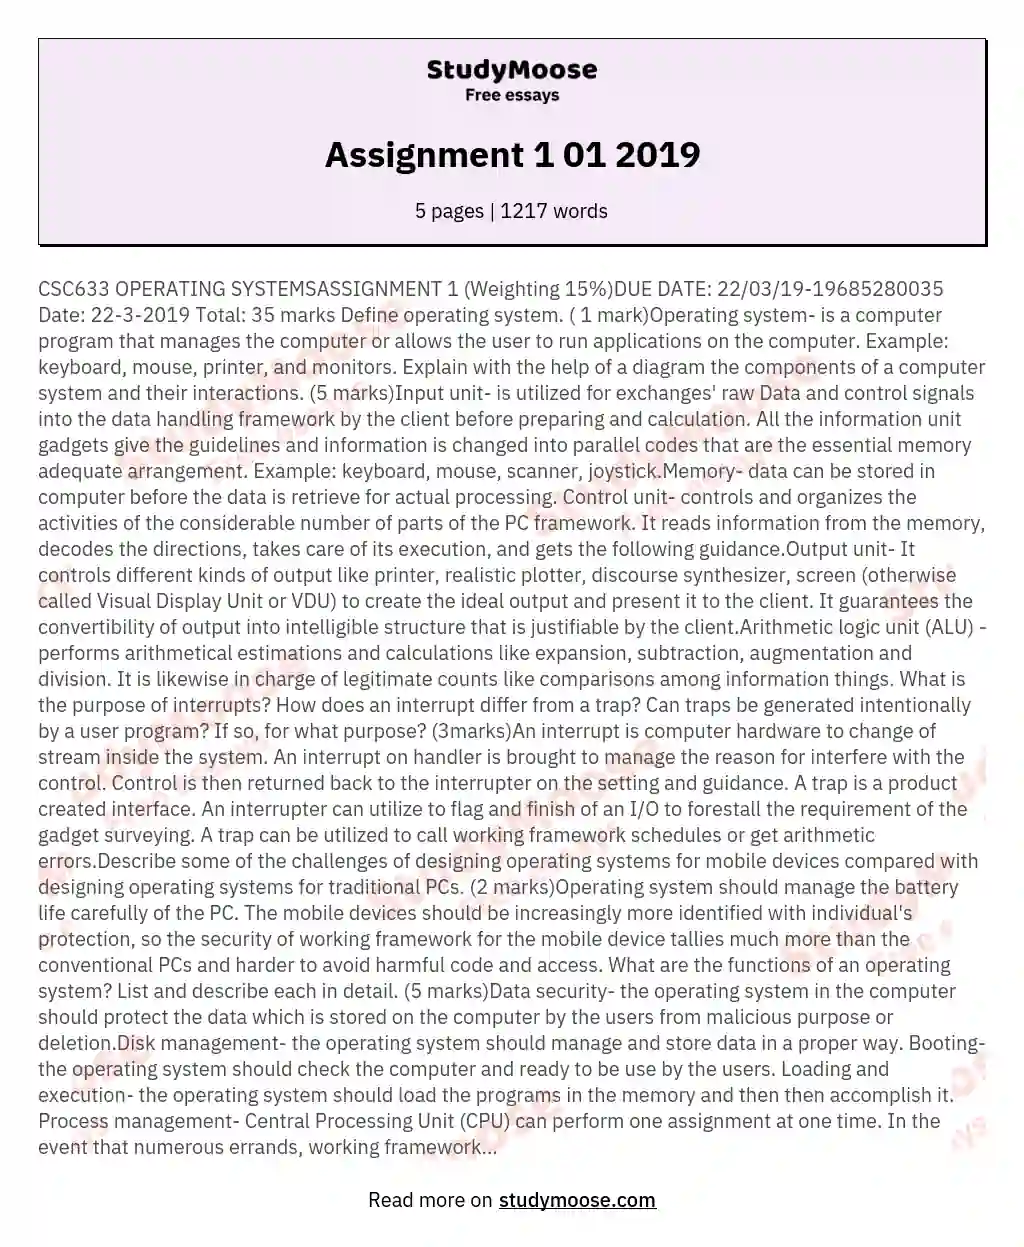 Assignment 1 01 2019 essay